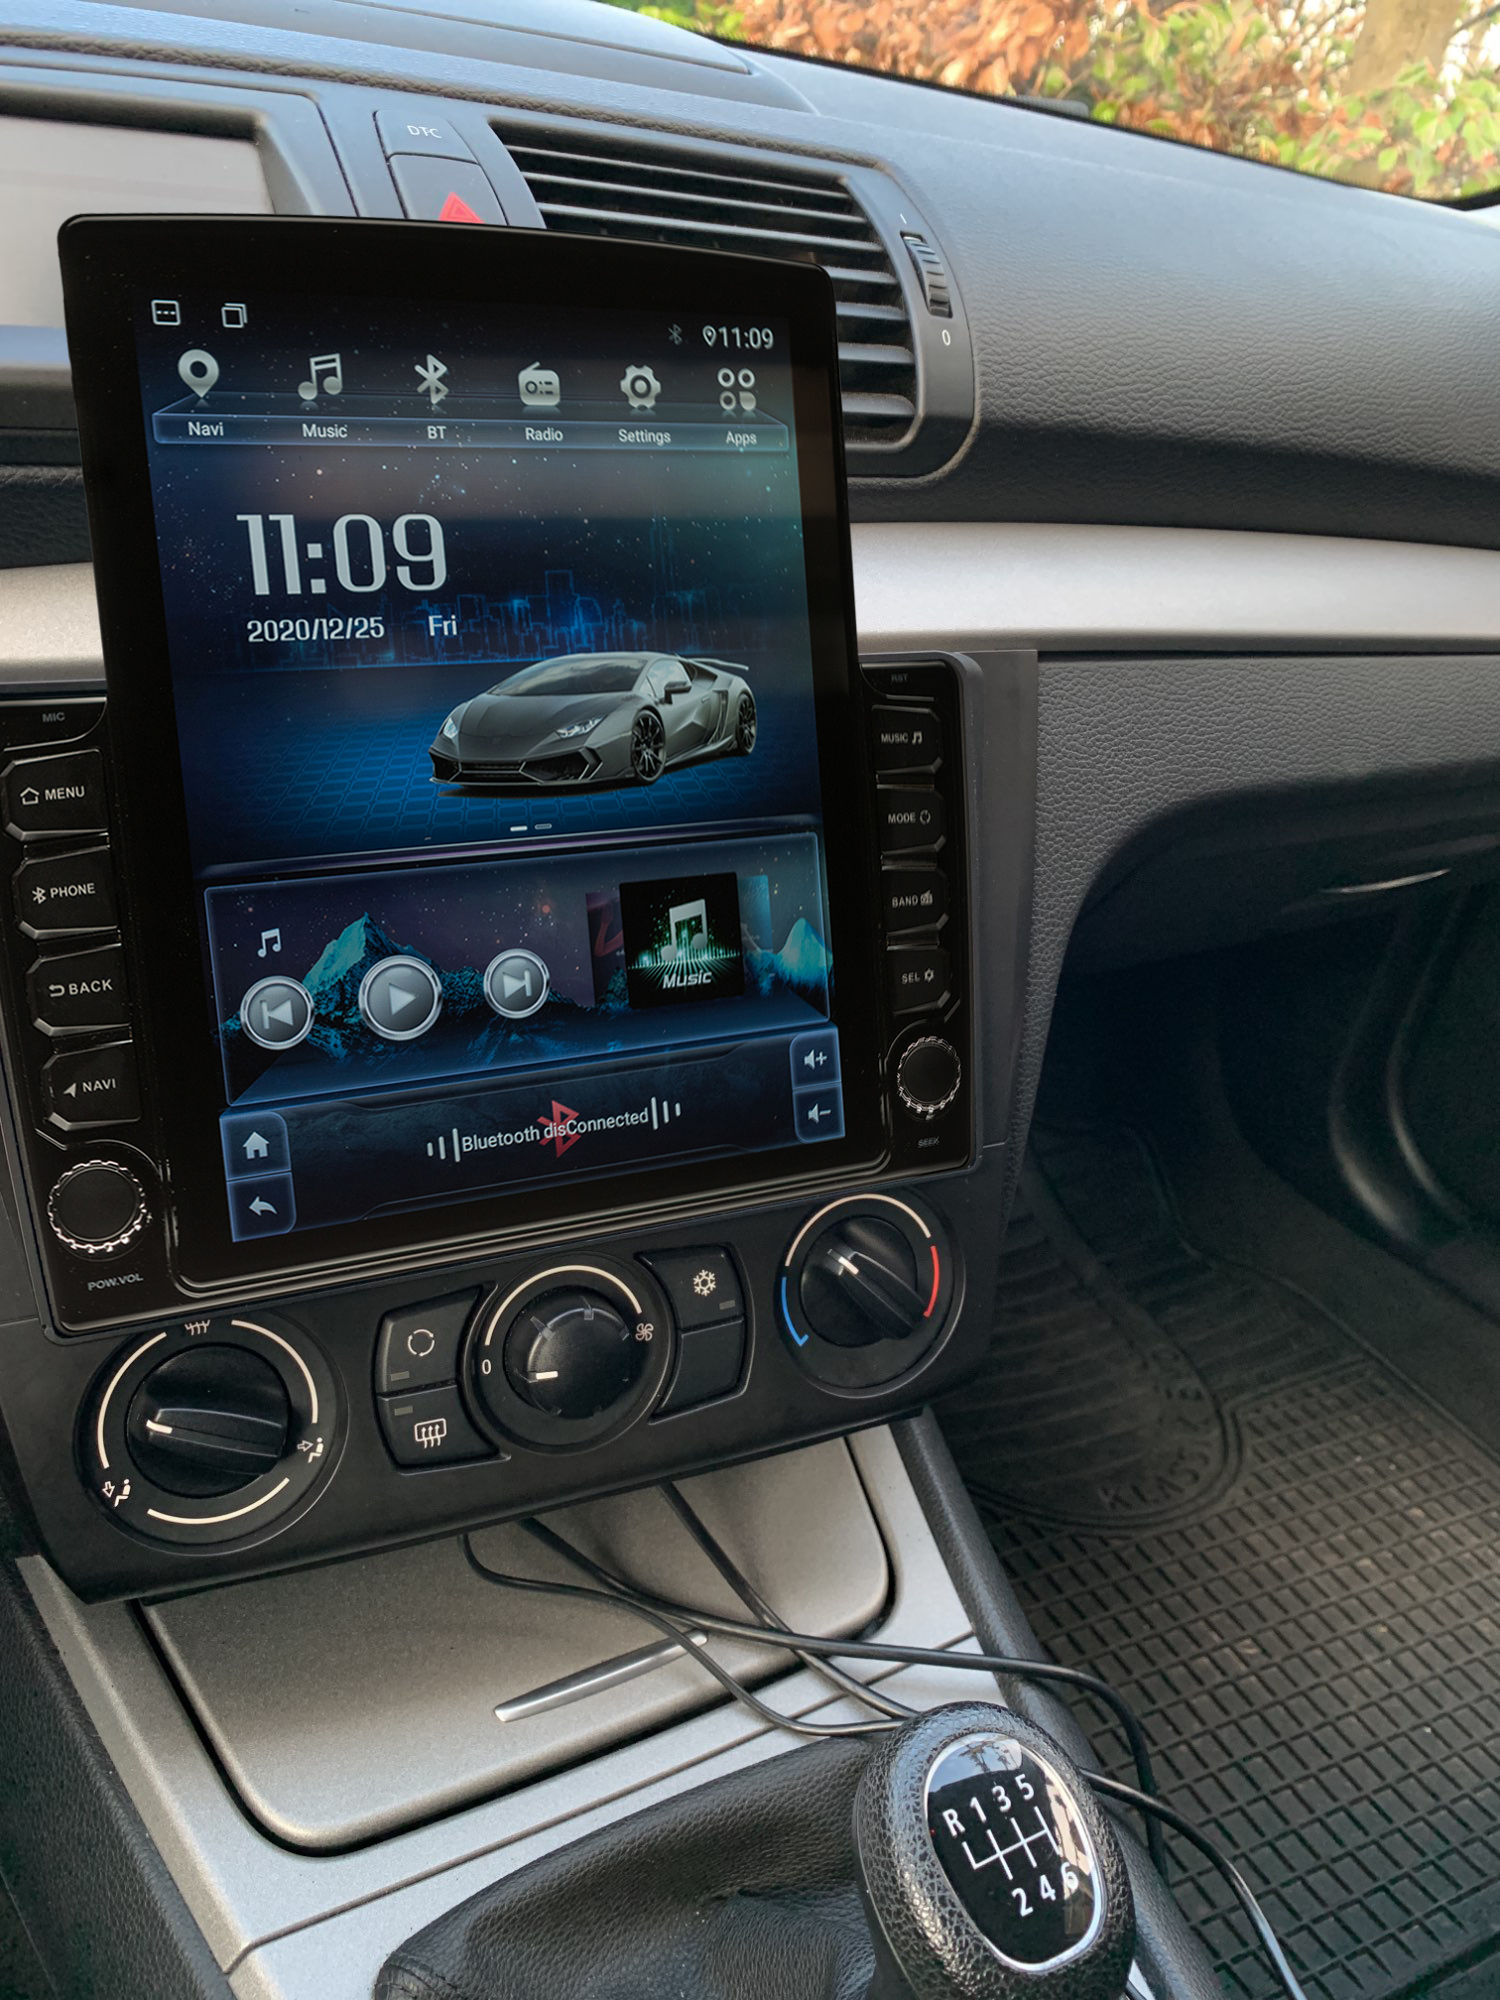 Navigatie AUTONAV PLUS Android GPS Dedicata BMW Seria 1 E81-88 Clima Auto, Model XPERT Memorie 16GB Stocare, 1GB DDR3 RAM, Display Vertical Stil Tesla 10" Full-Touch, WiFi, 2 x USB, Bluetooth, Quad-Core 4 * 1.3GHz, 4 * 50W Audio